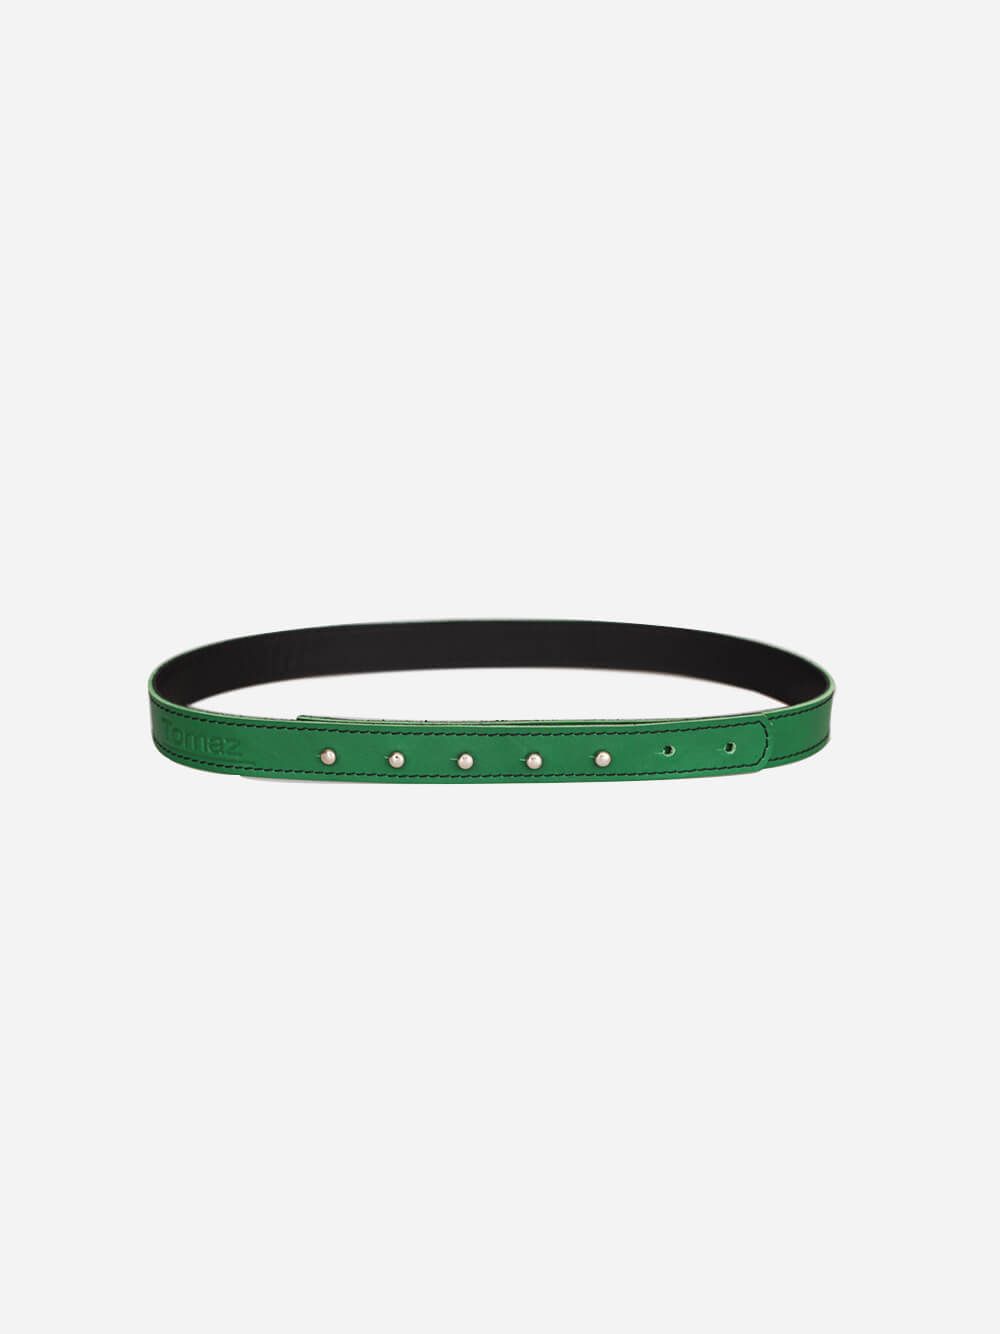 Francis Leather Green Belt | Tomaz